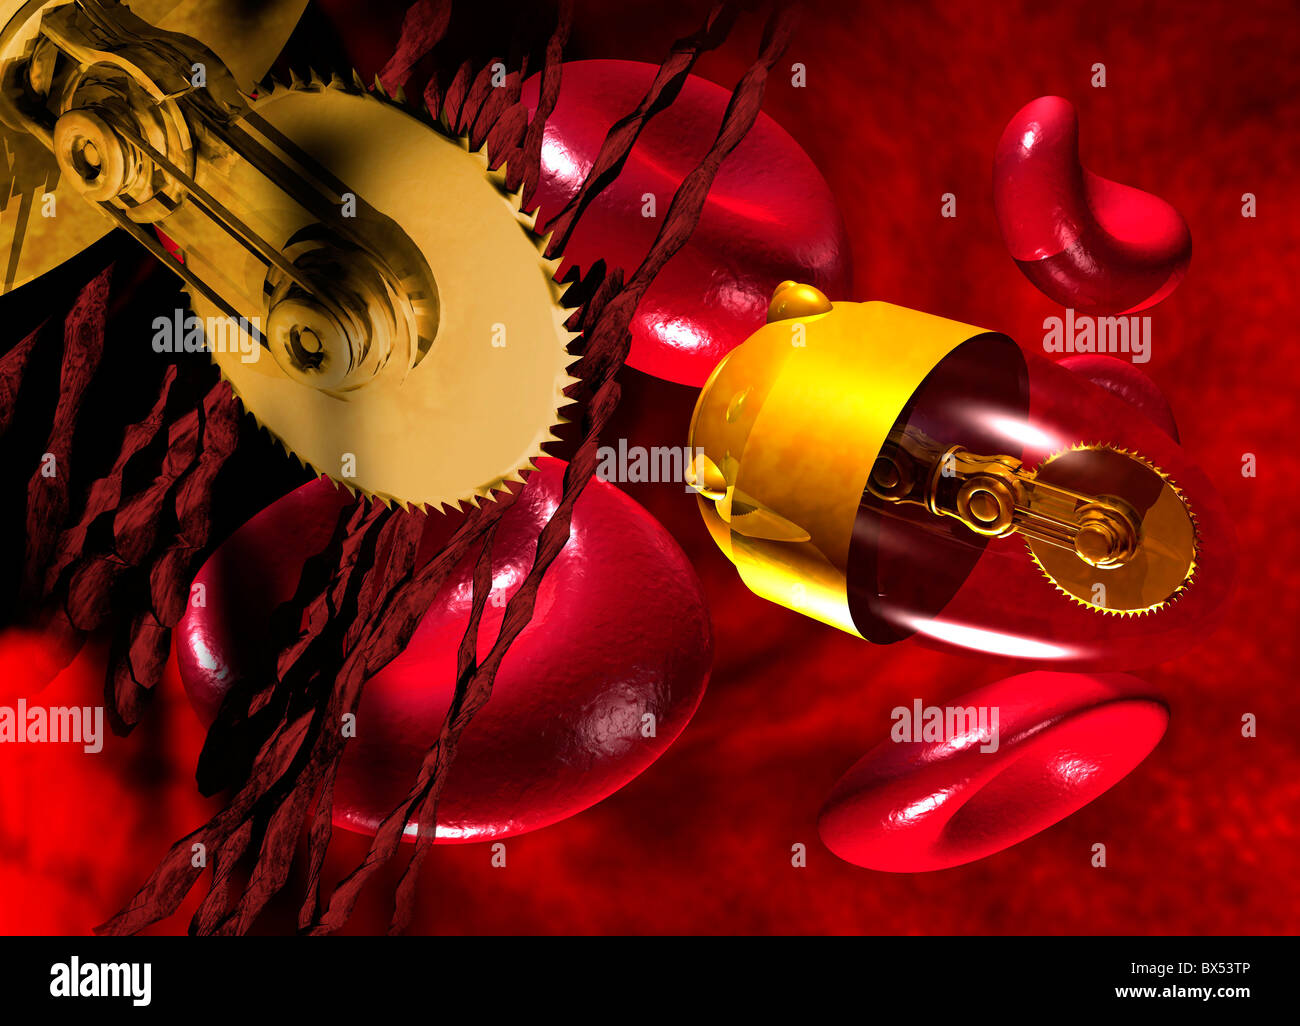 Medical nanorobot, artwork Stock Photo